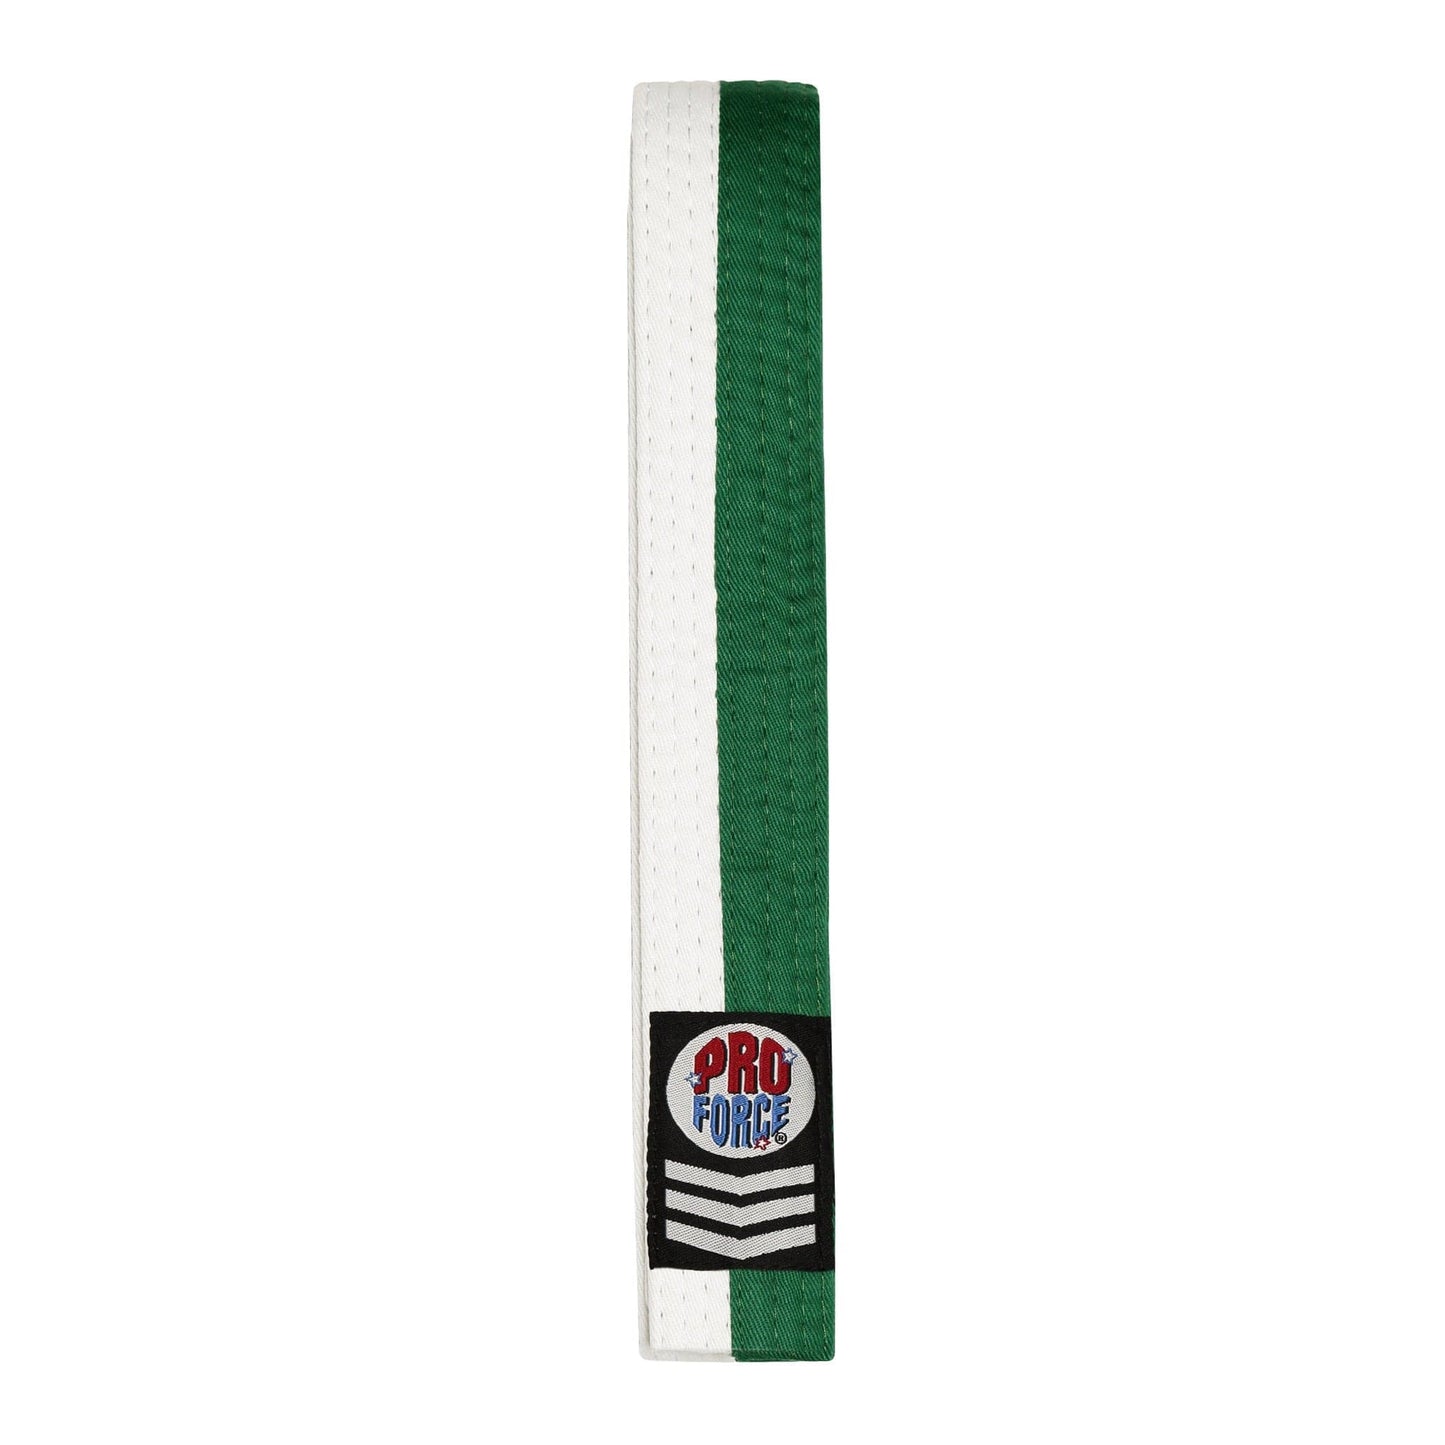 ProForce karate belt Green / 0 child Small ProForce 1.5 inch wide Double Wrap Two-Tone Karate Belt